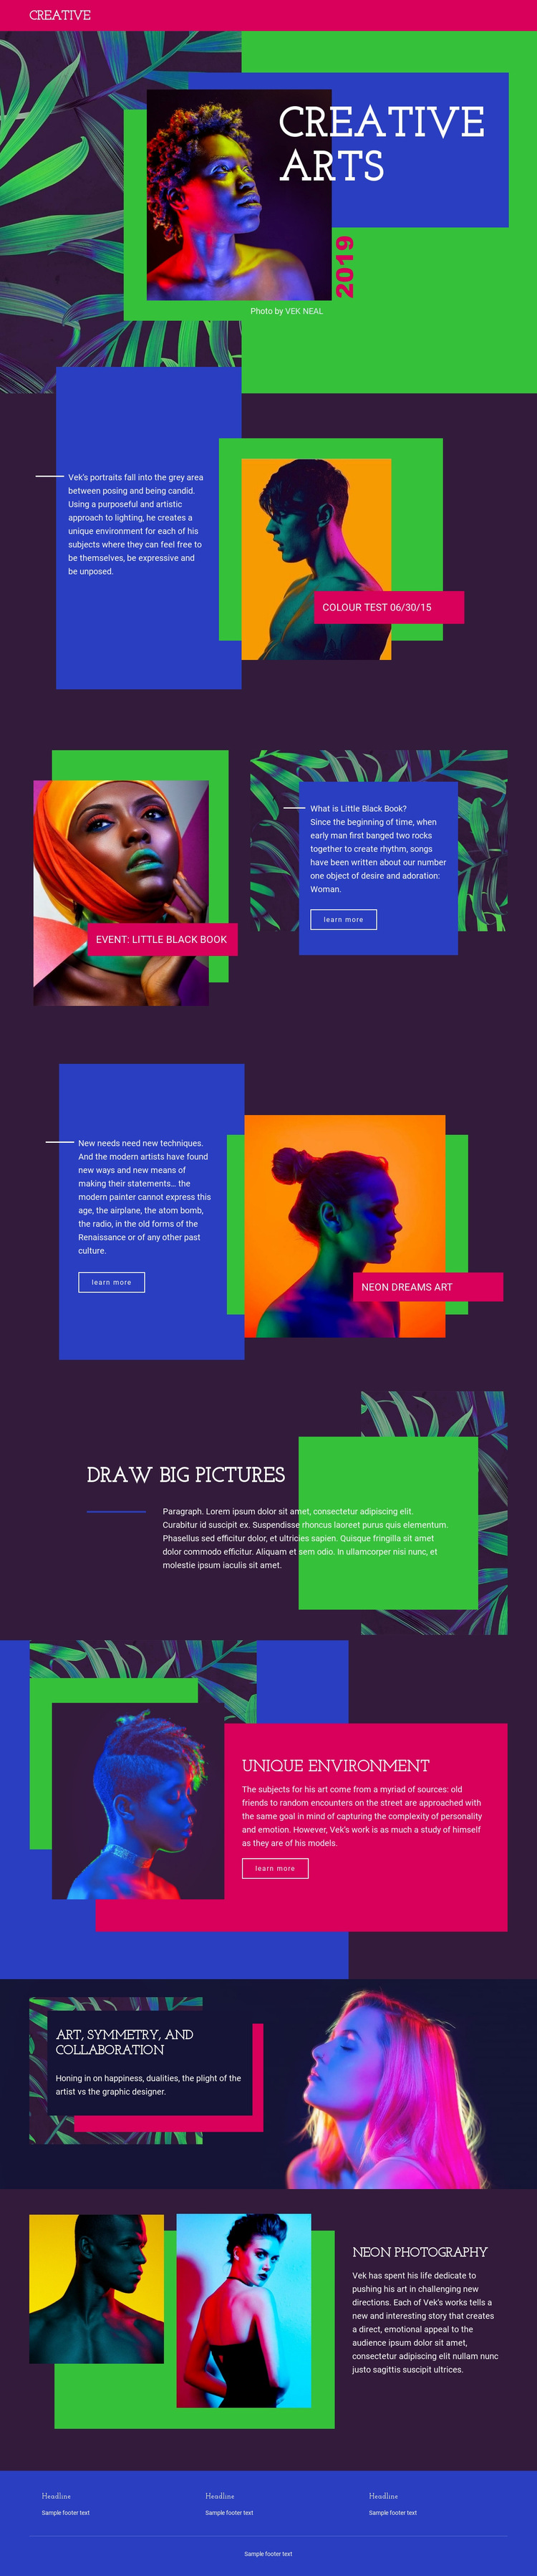 Creative Art Ideas Web Page Design